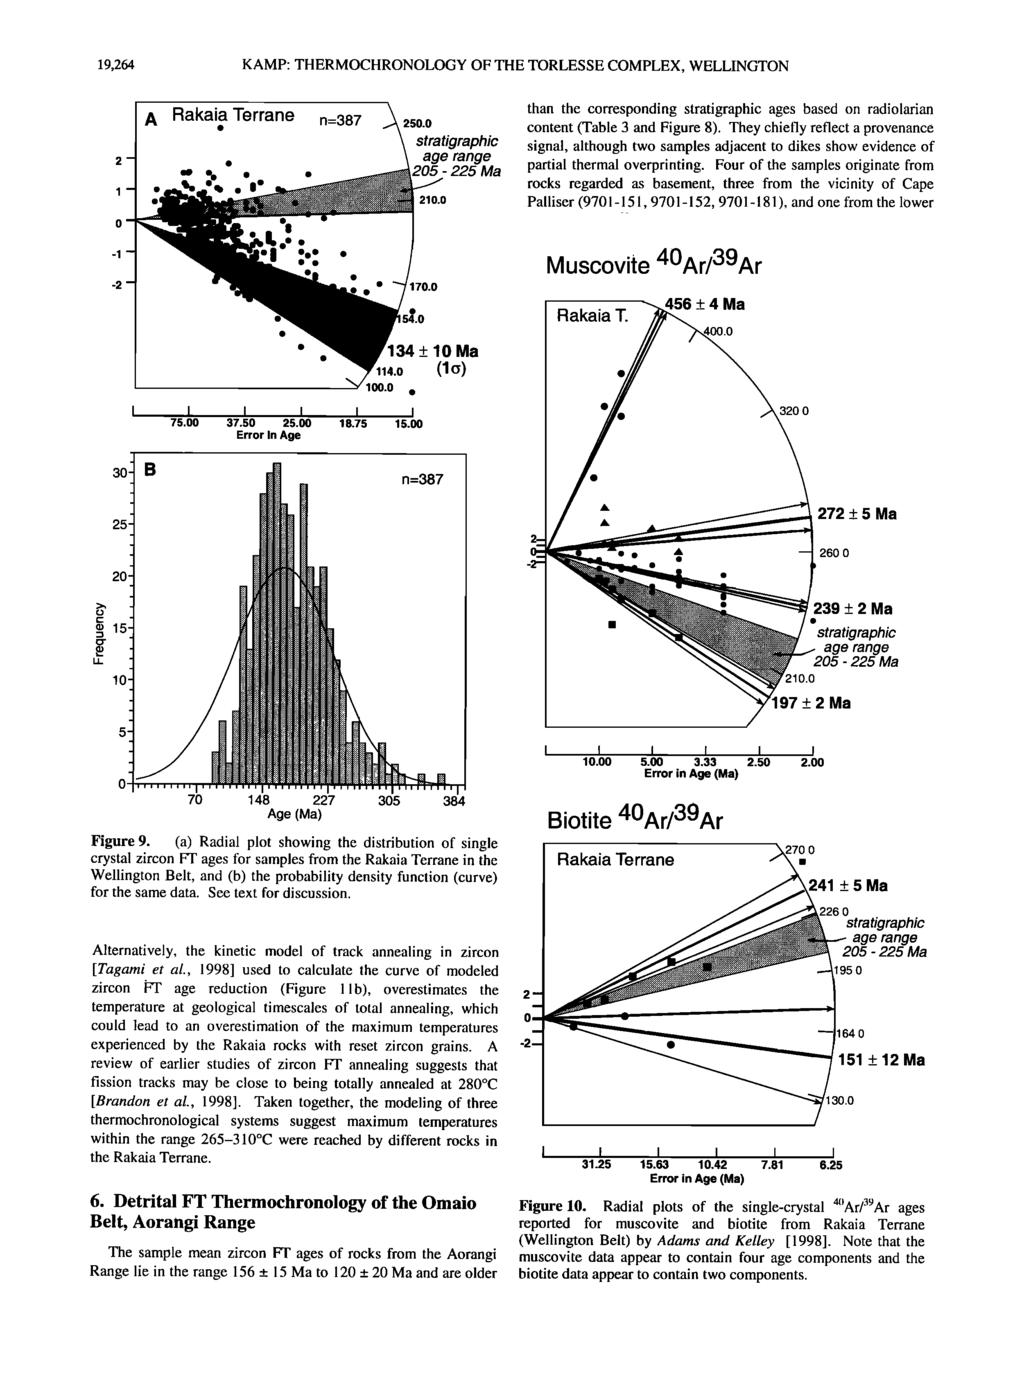 .... 19,264 KAMP: THERMOCHRONOLOGY OF THE TORLESSE COMPLEX, WELLINGTON A Rakaia Terrane n=387 ß 250.0 stratigraphic age range 205-225 Ma 210.